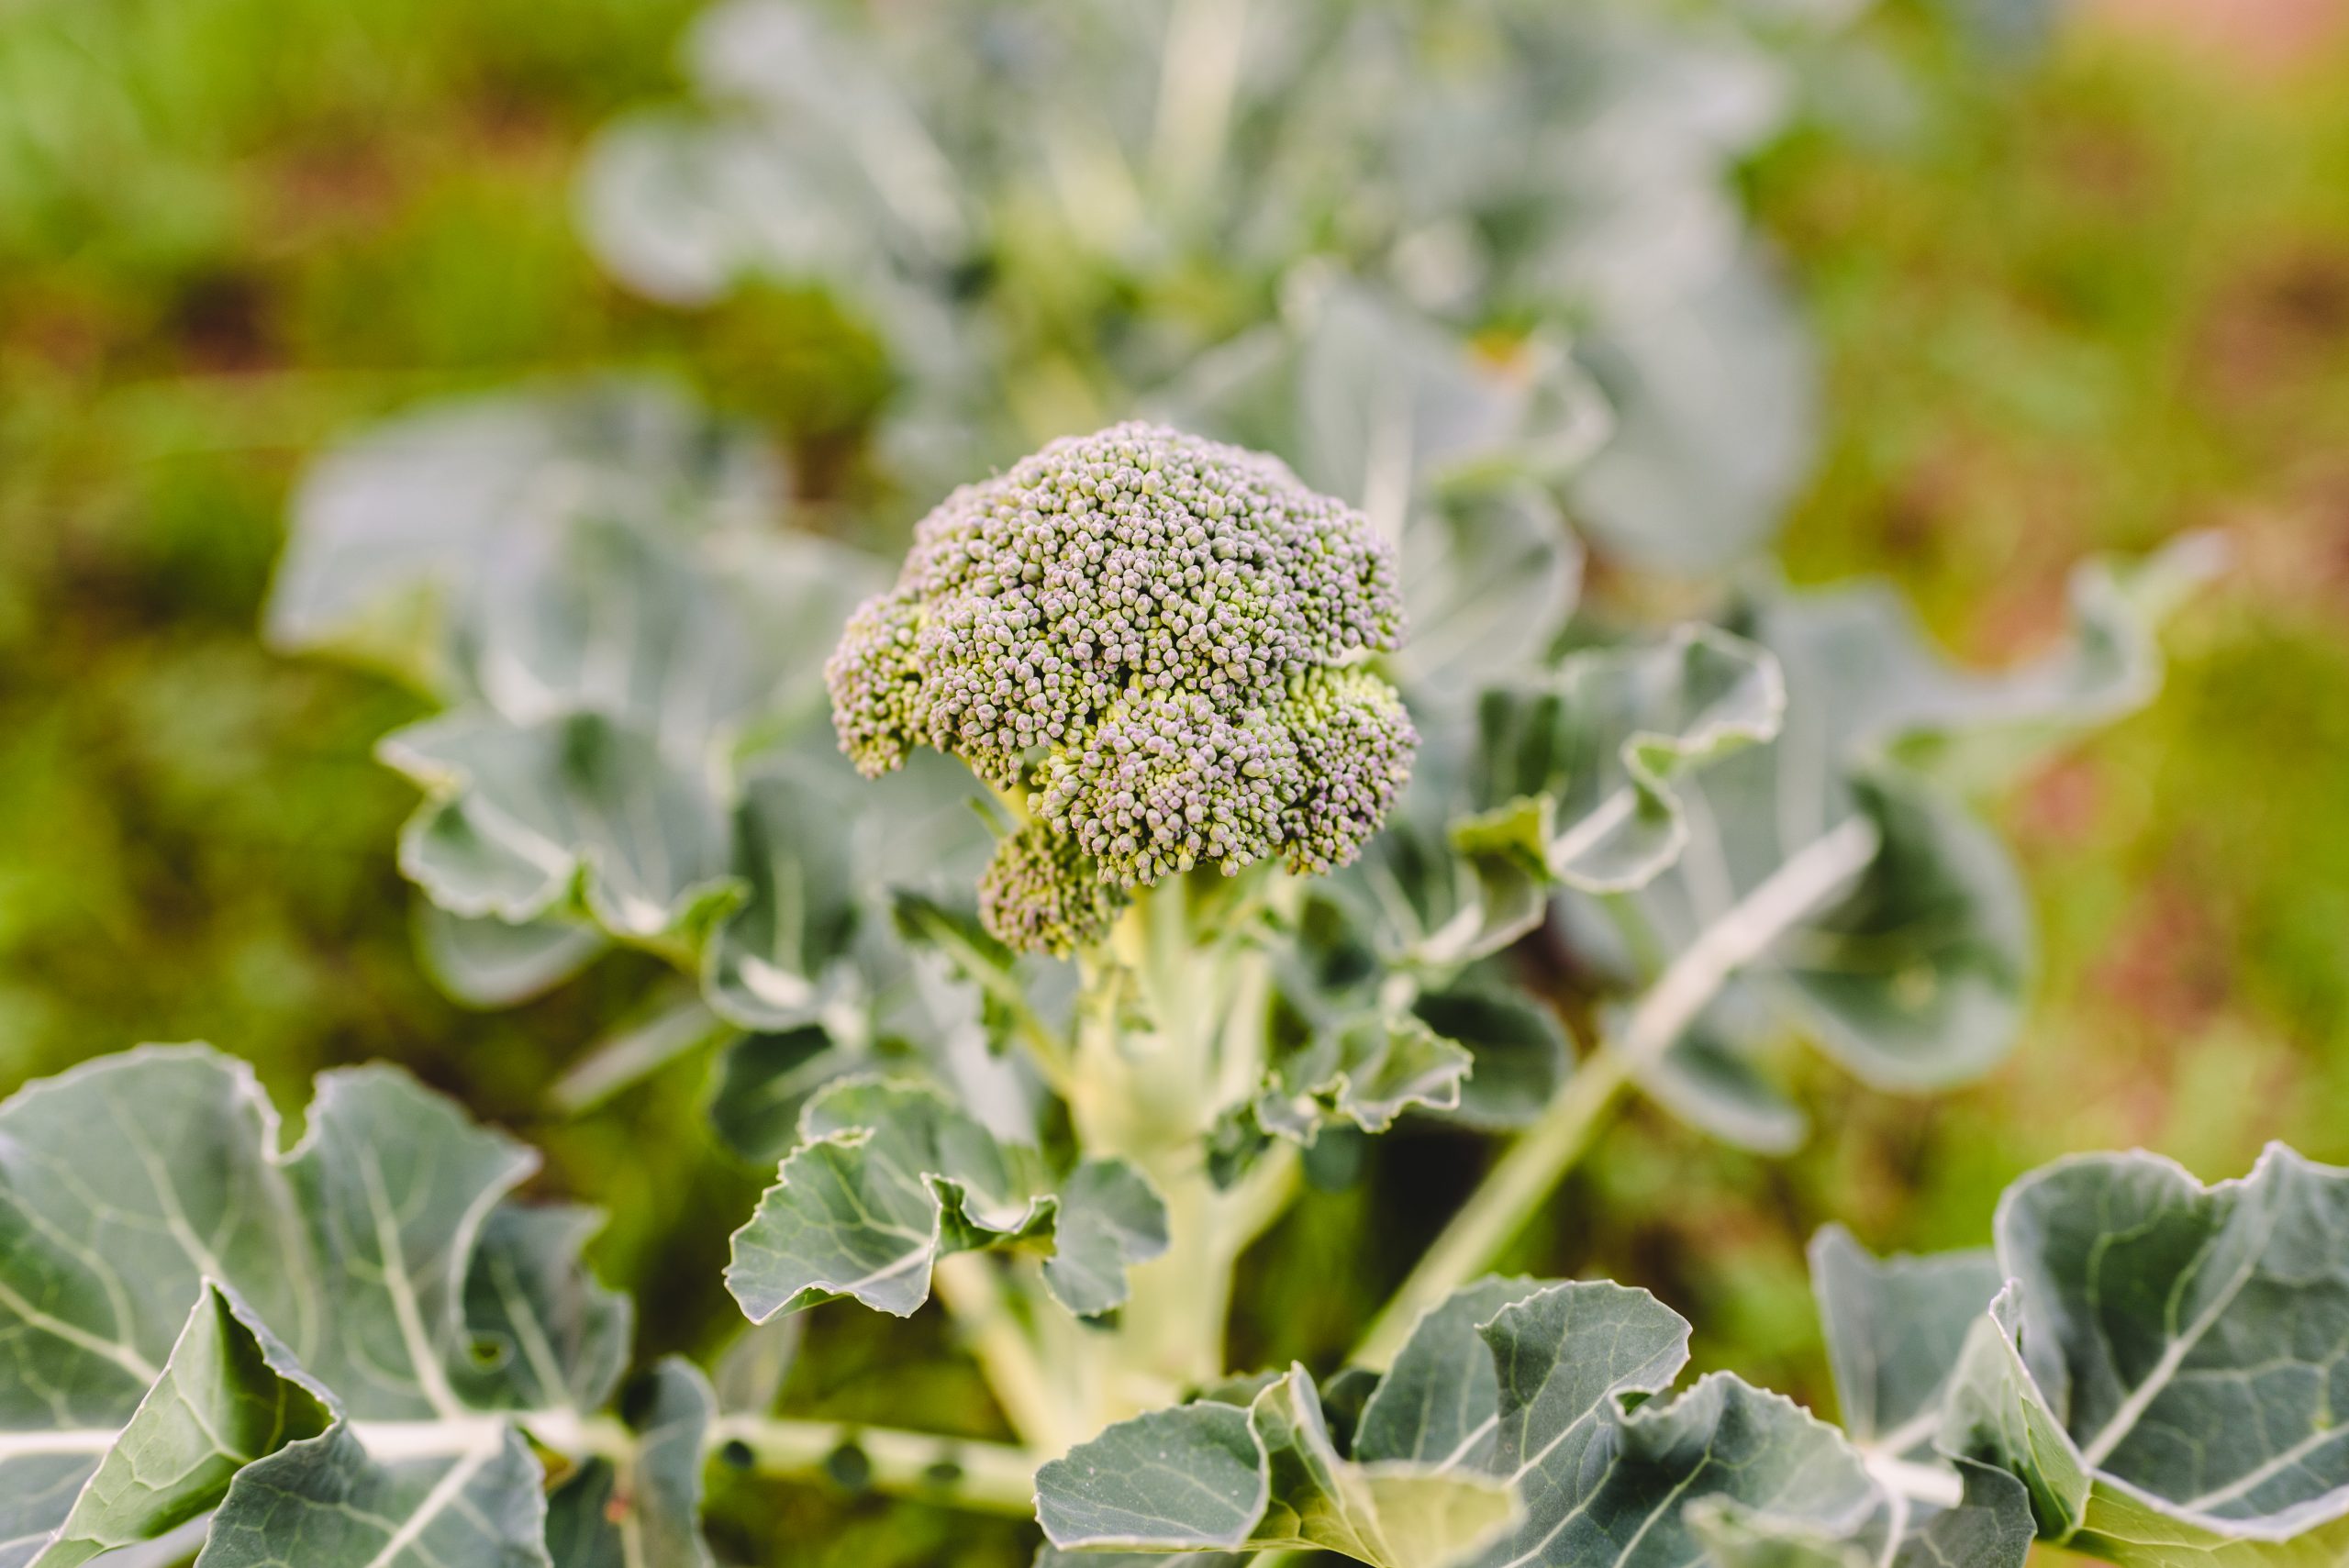 Broccoli crown